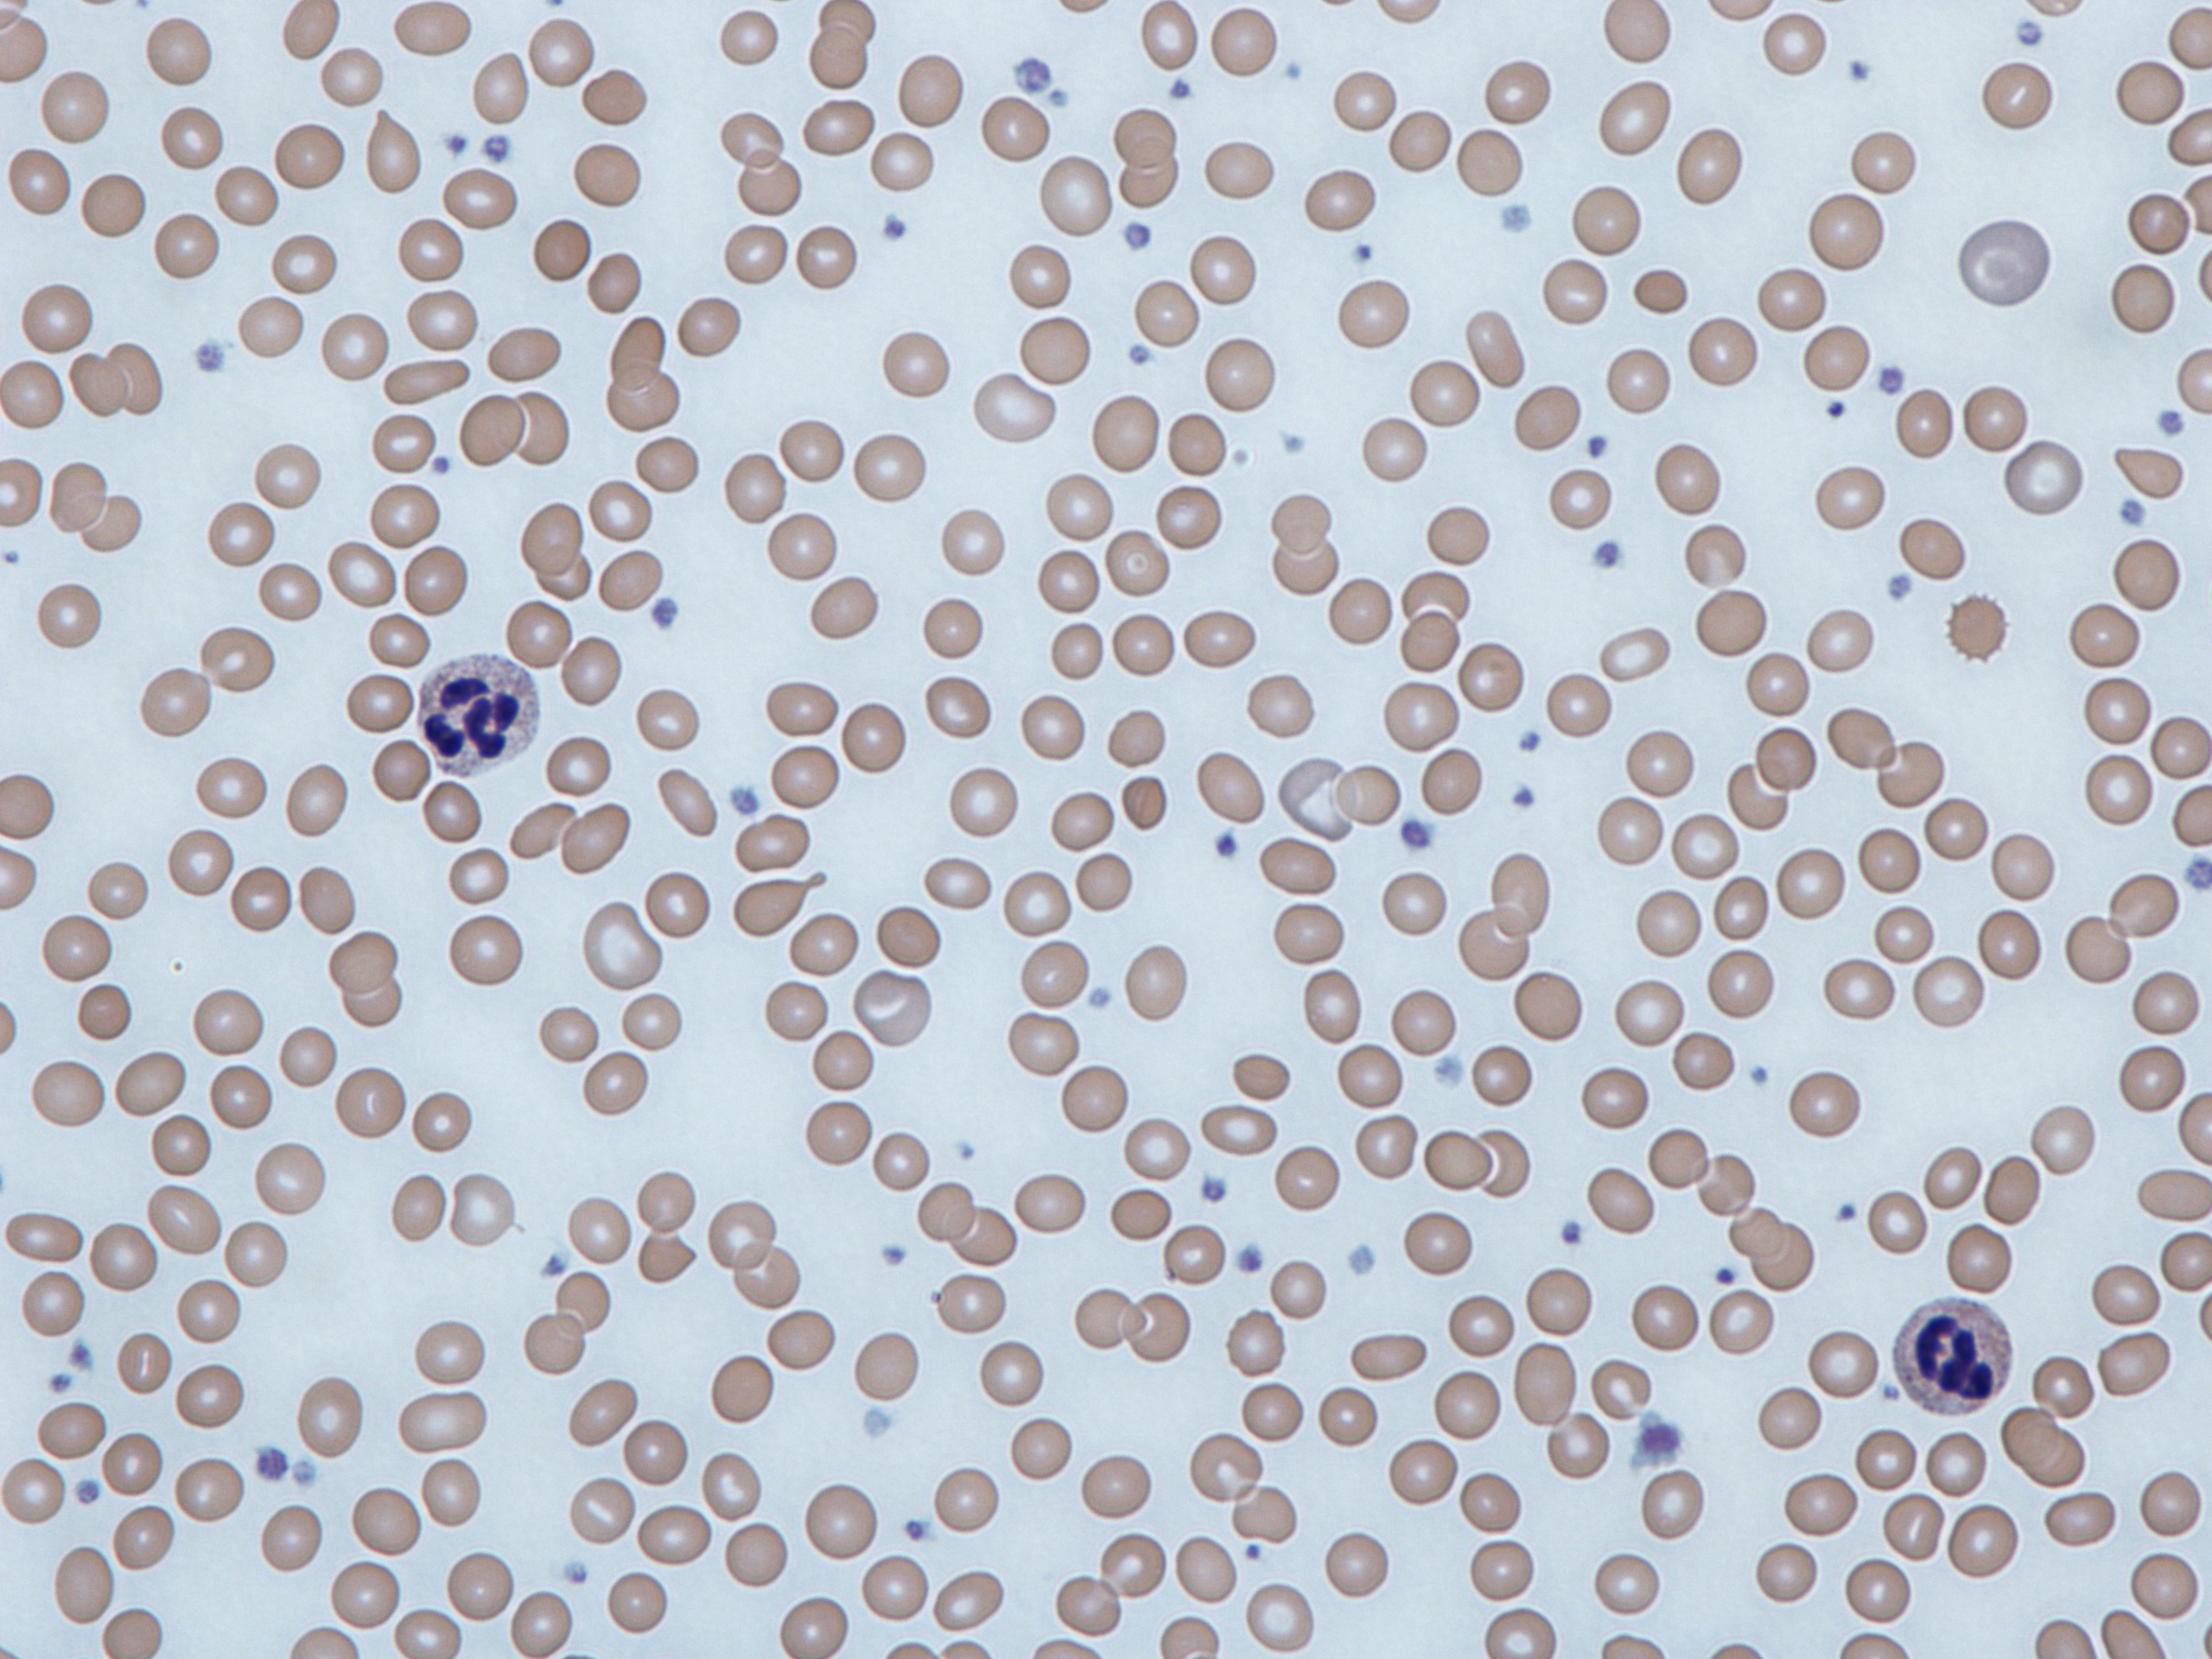 File:Iron deficiency anemia blood film.jpg